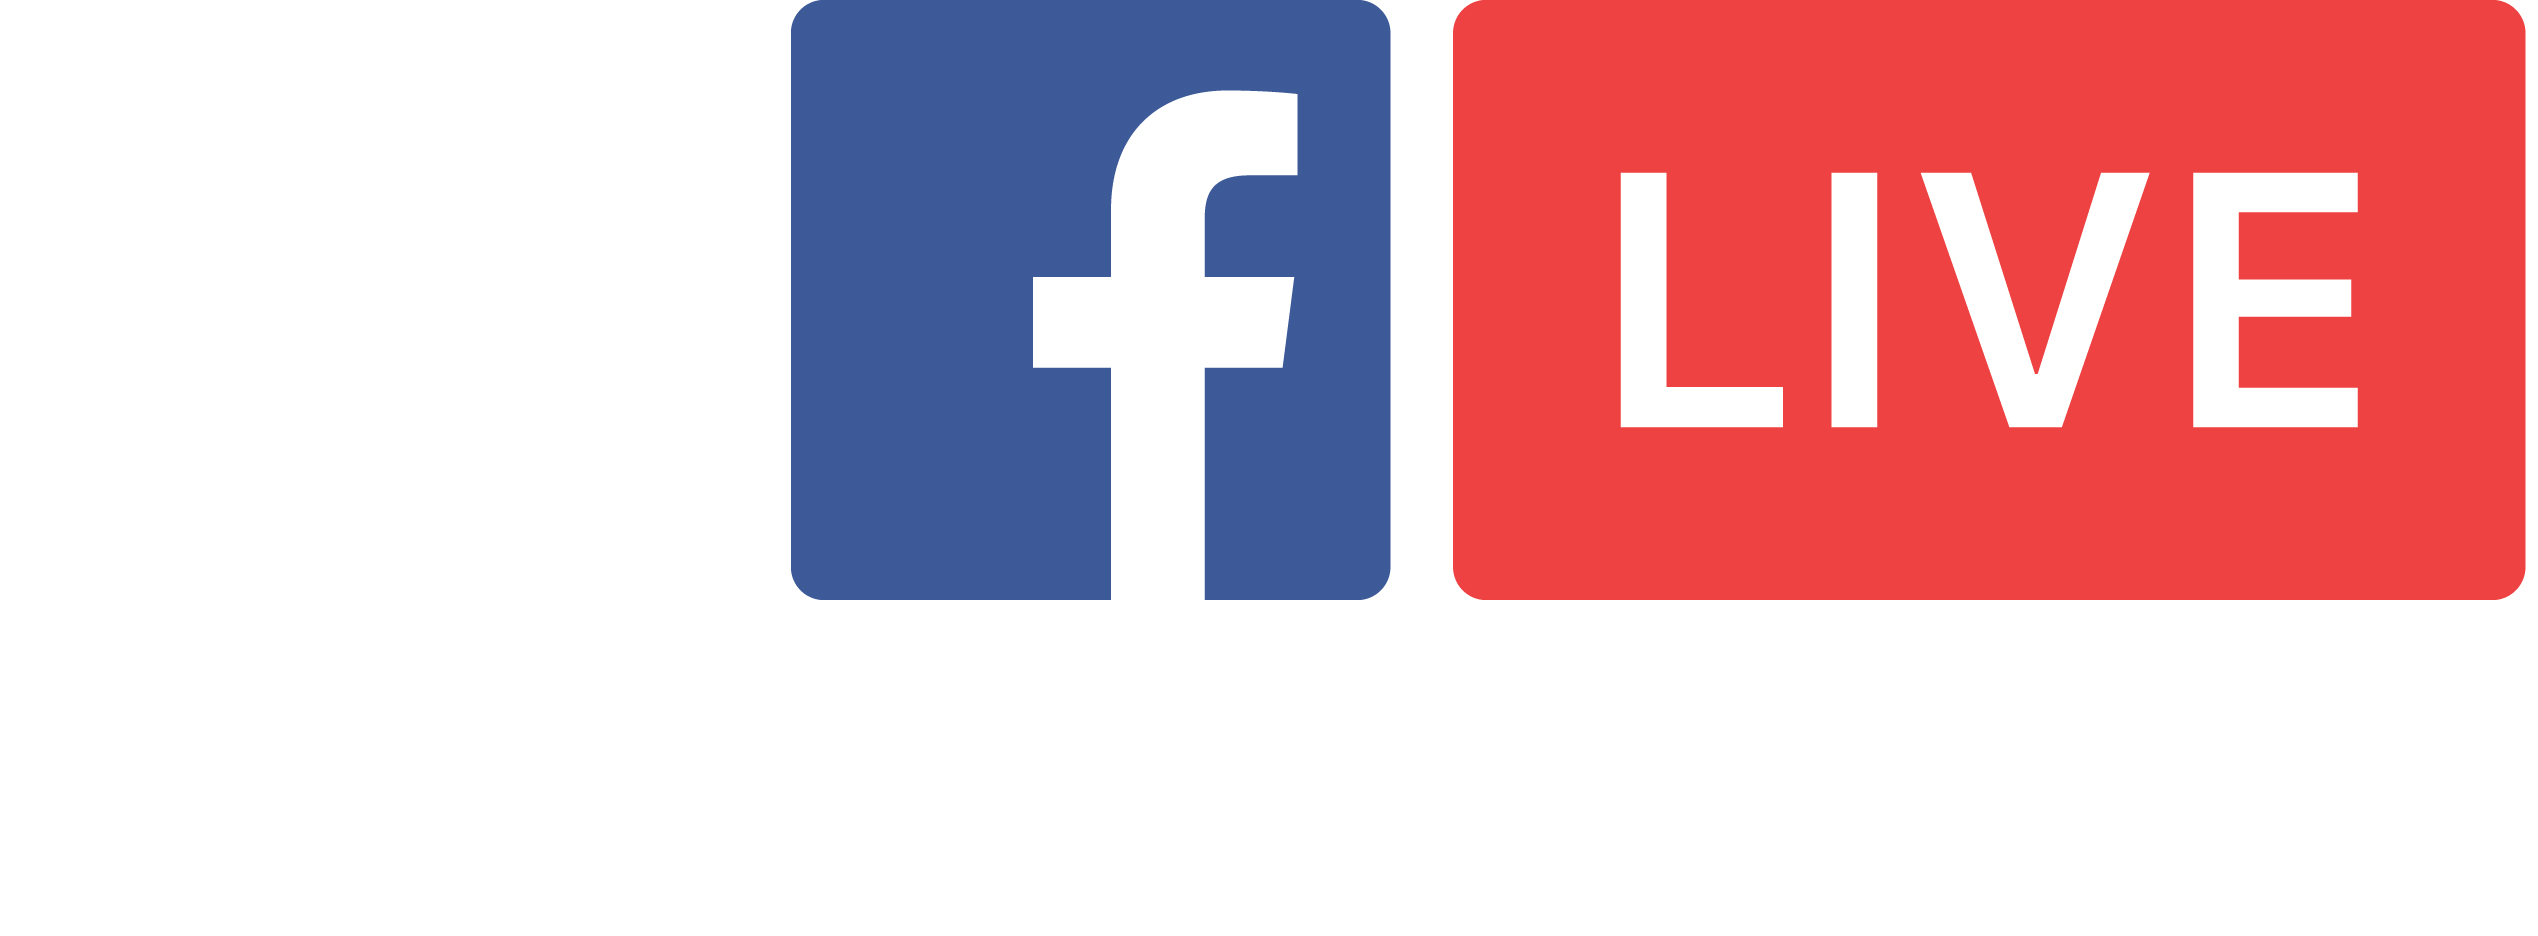 Facebook-Live-2